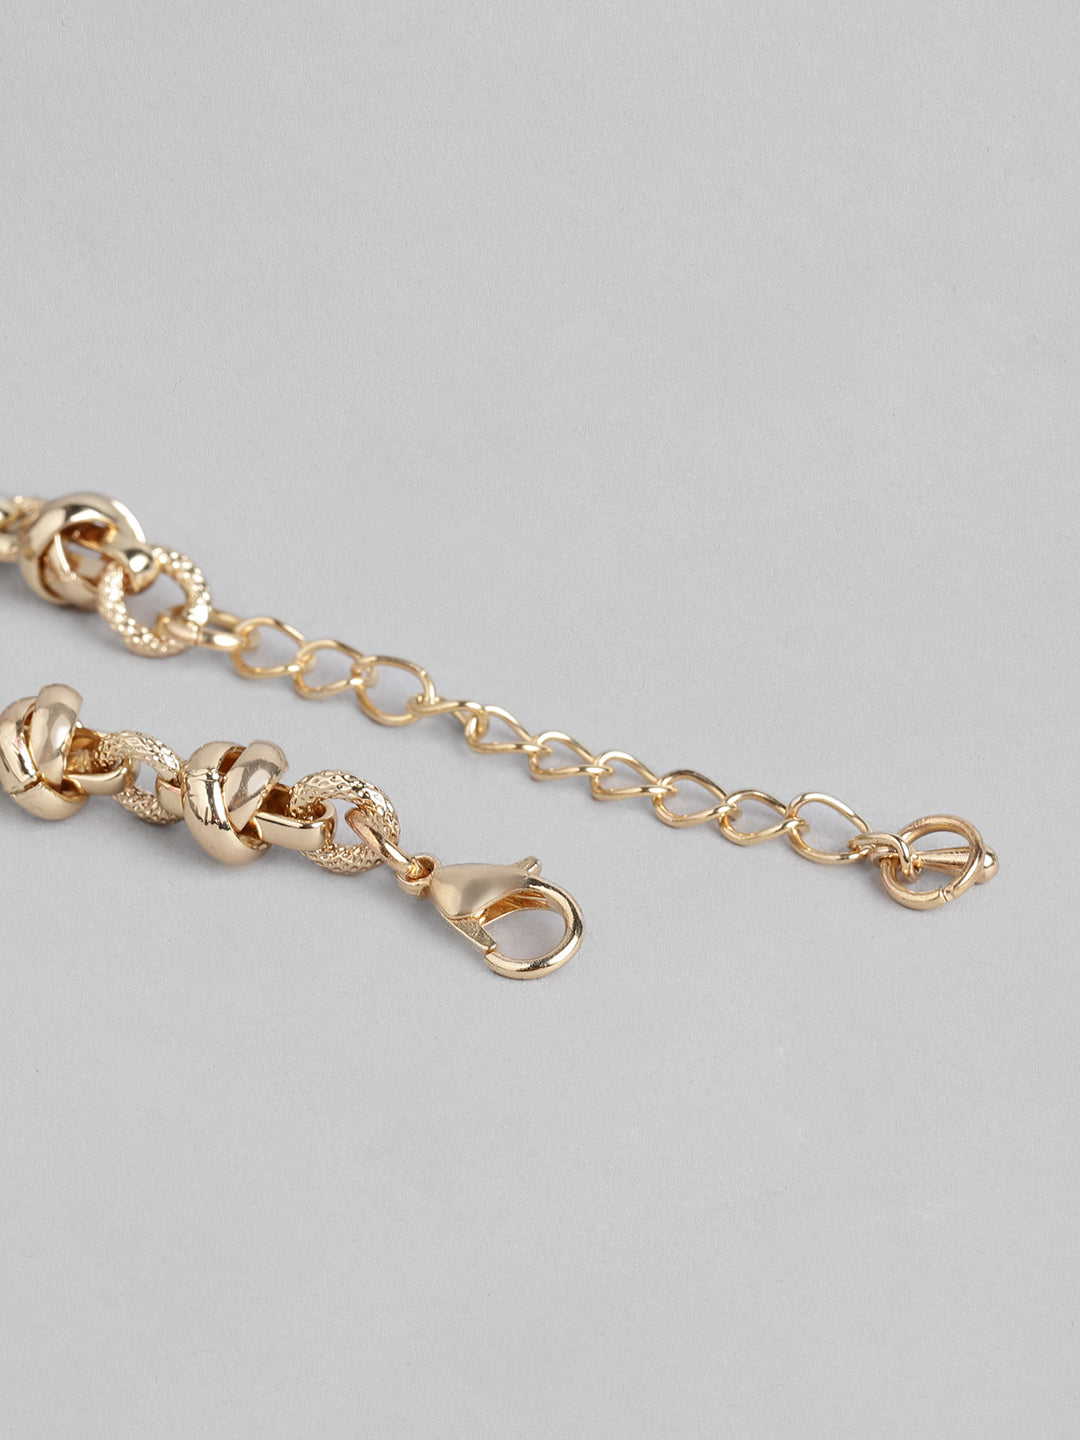 Blueberry gold plated inter lock chain bracelet